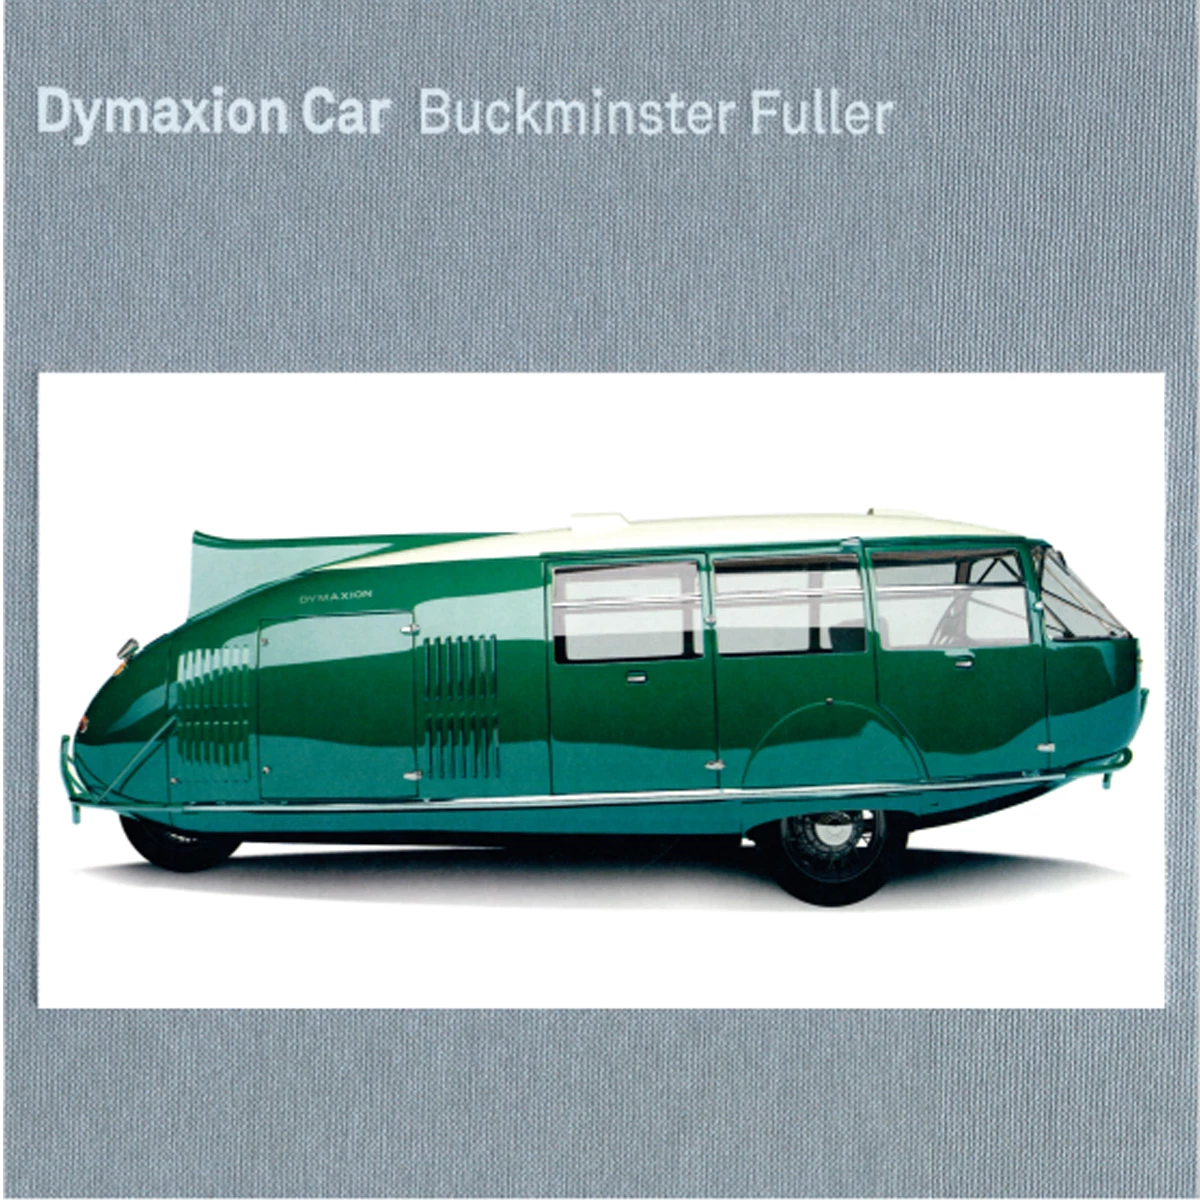 Dymaxion Car. Buckminster Fuller